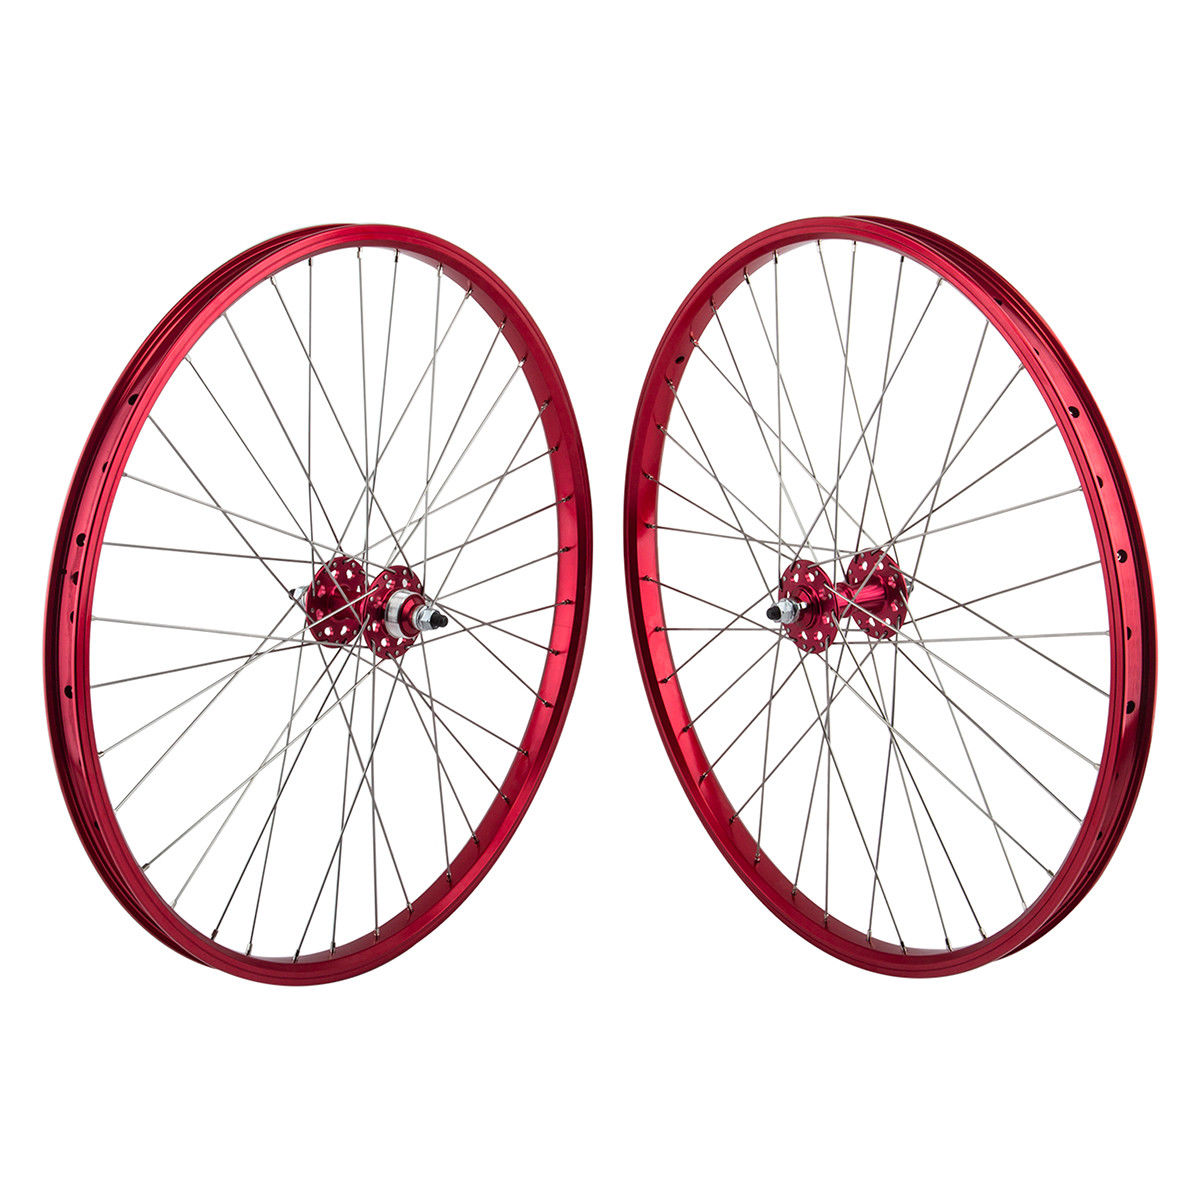 26" SE Racing Wheelset - Pair - 36H - Double Wall - Sealed Bearing - Freewheel - Red